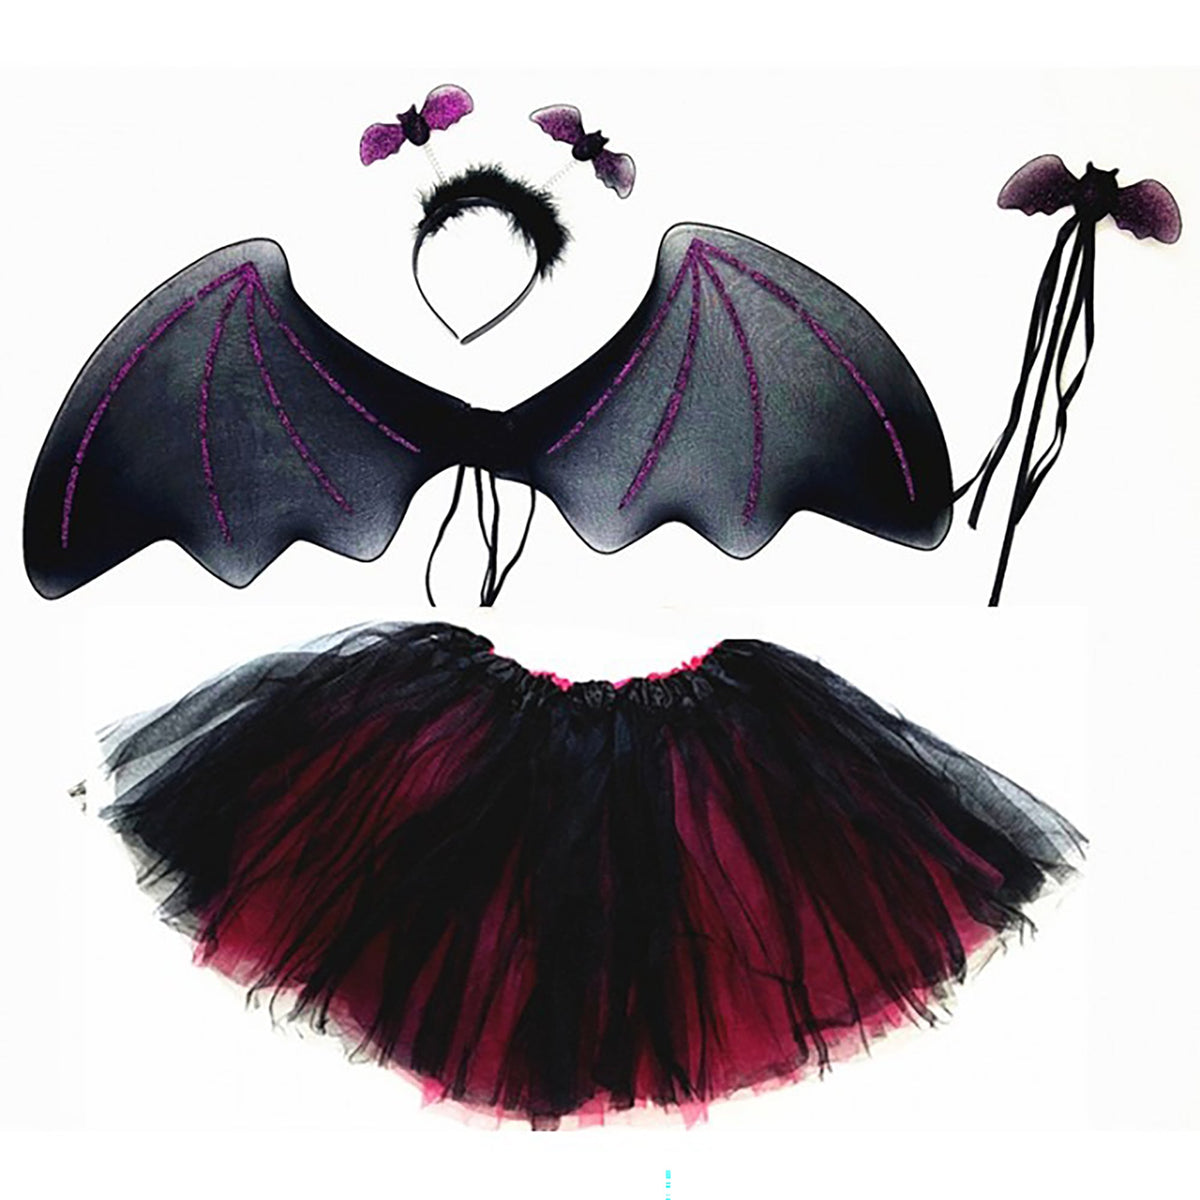 IVY TRADING INC. Costume Accessories Black Bat Costume Kit for Kids, Black and Pink Tutu 8336572323597